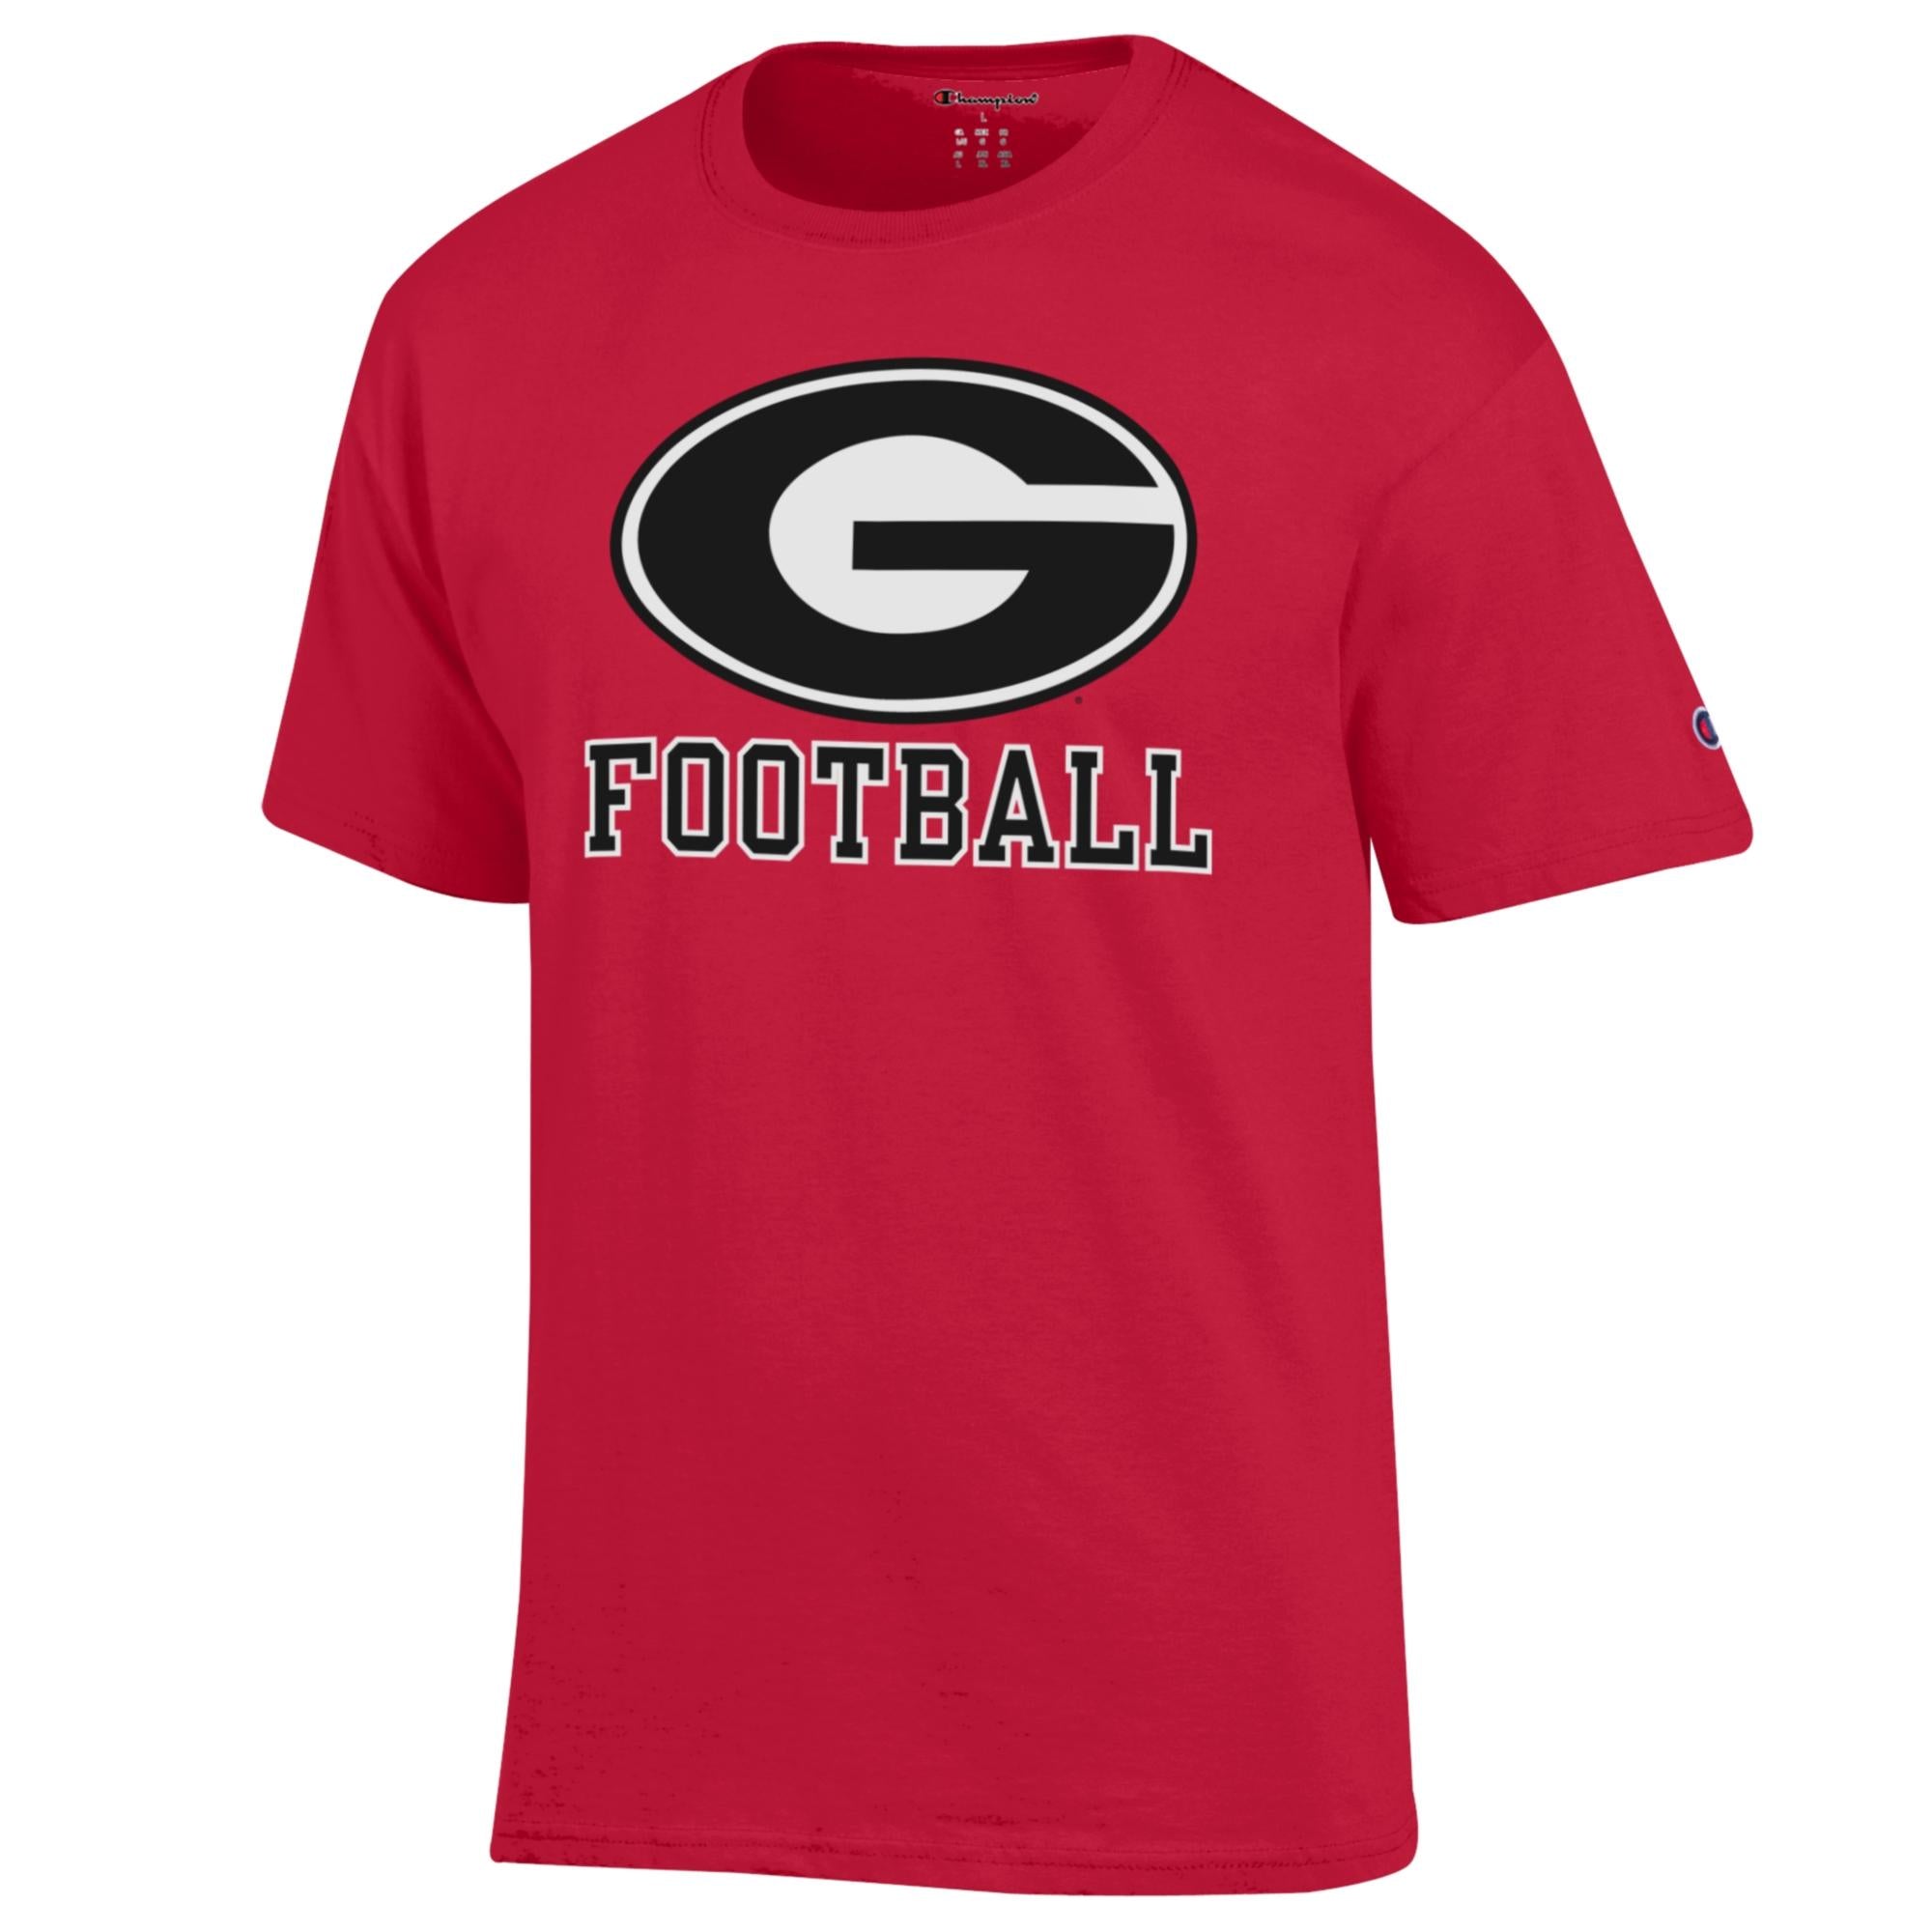 University of Georgia Bulldogs Football Shirt - Red